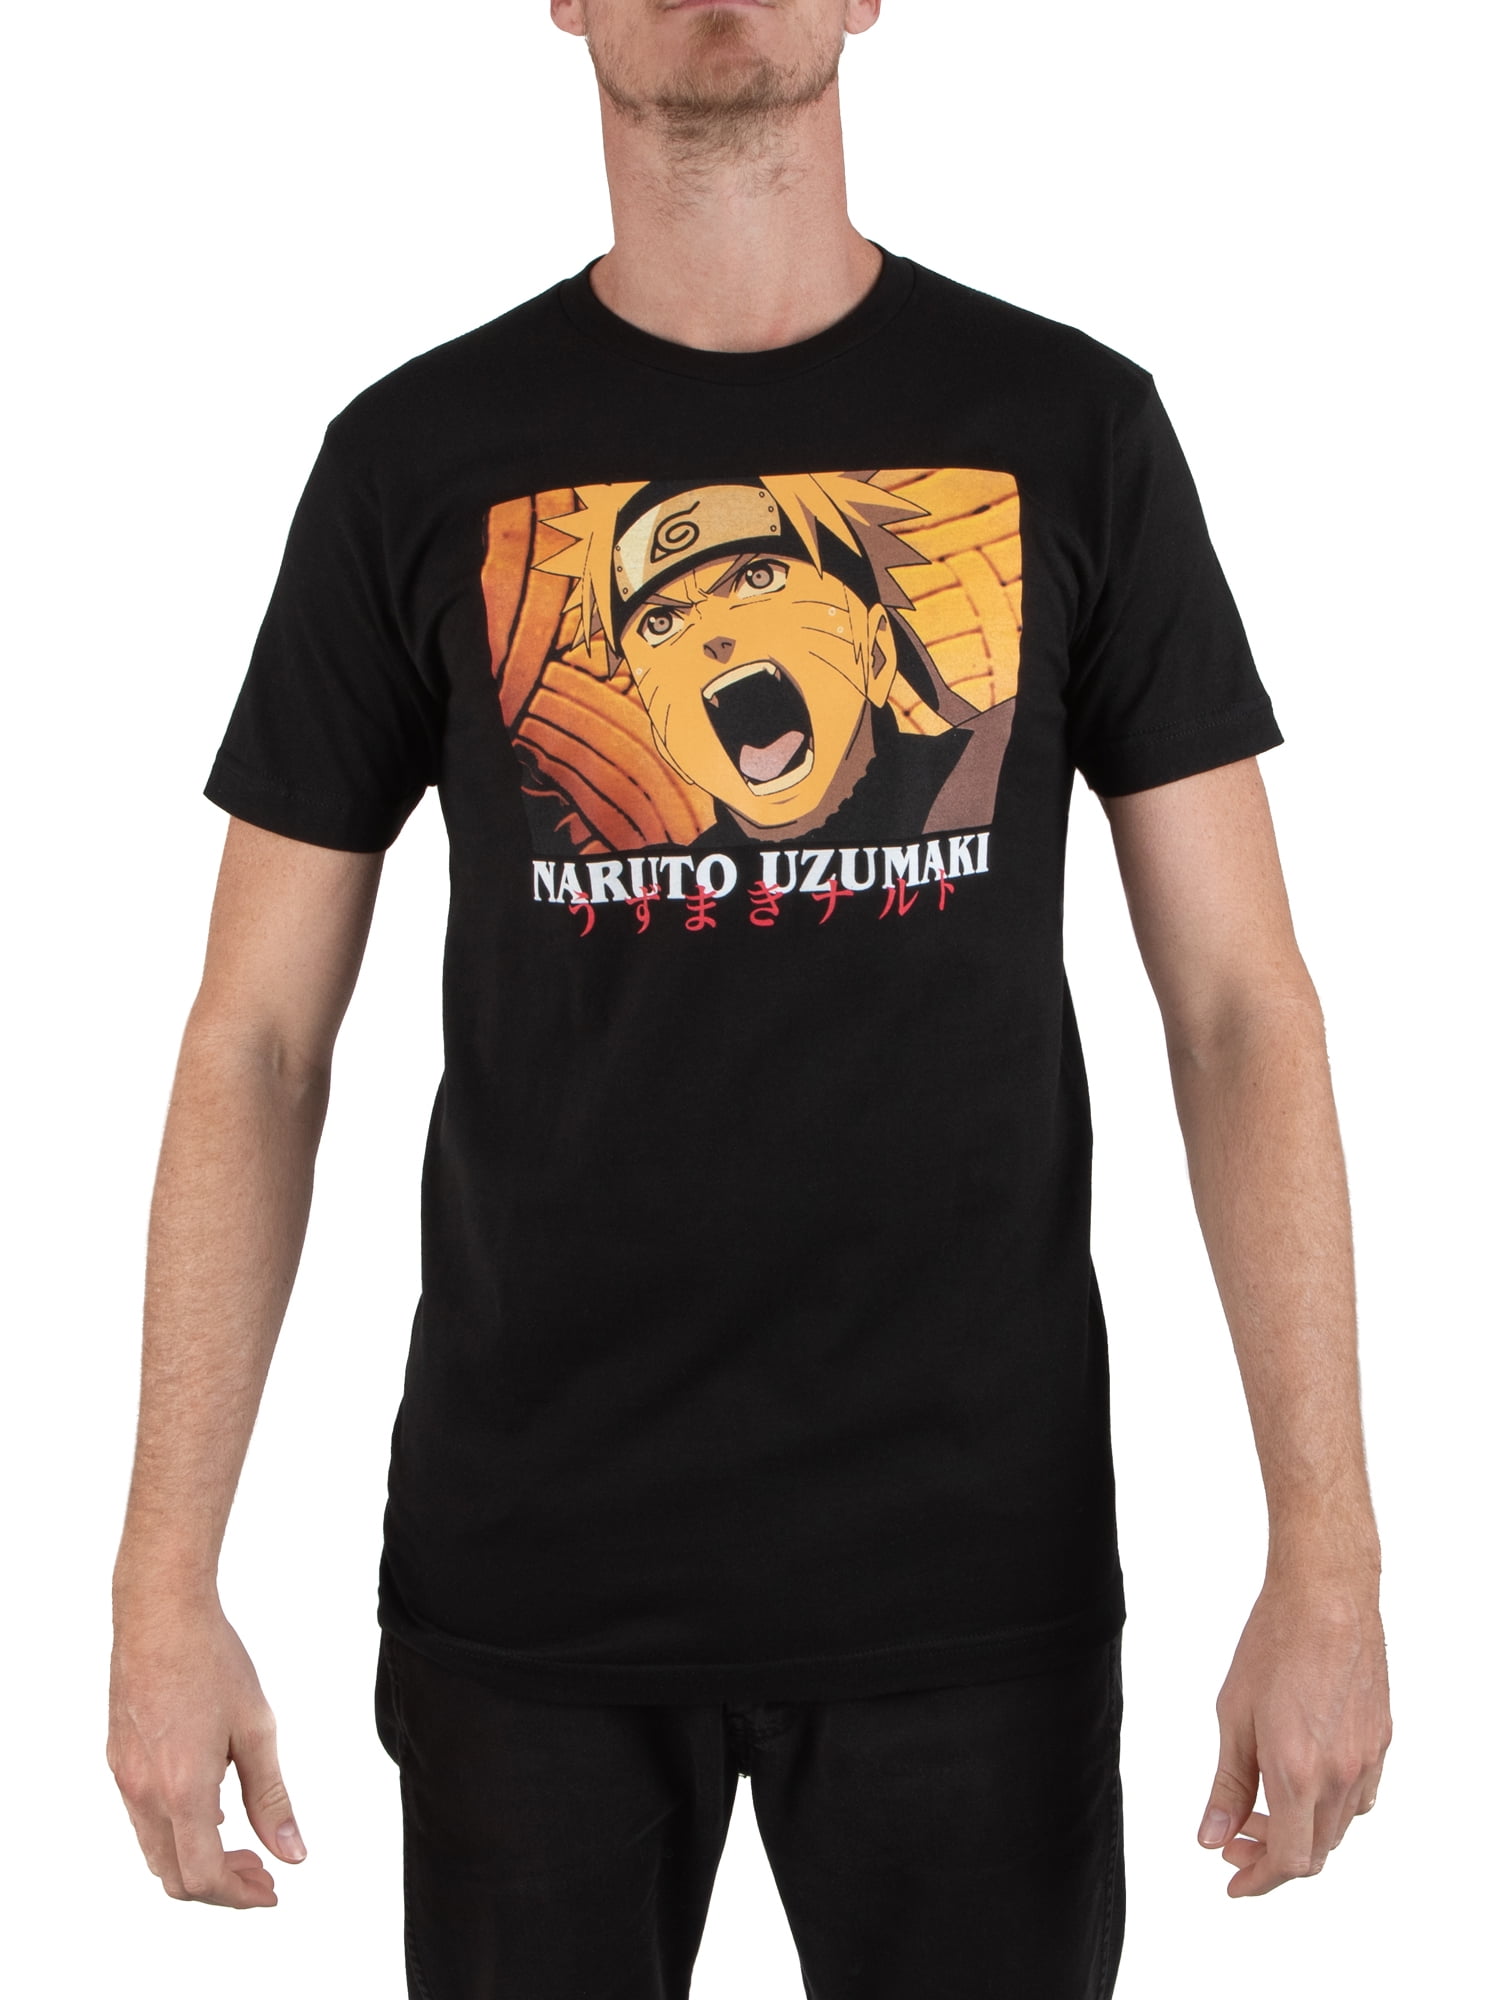 Naruto Yell Men's and Big Men's Graphic T-shirt - Walmart.com